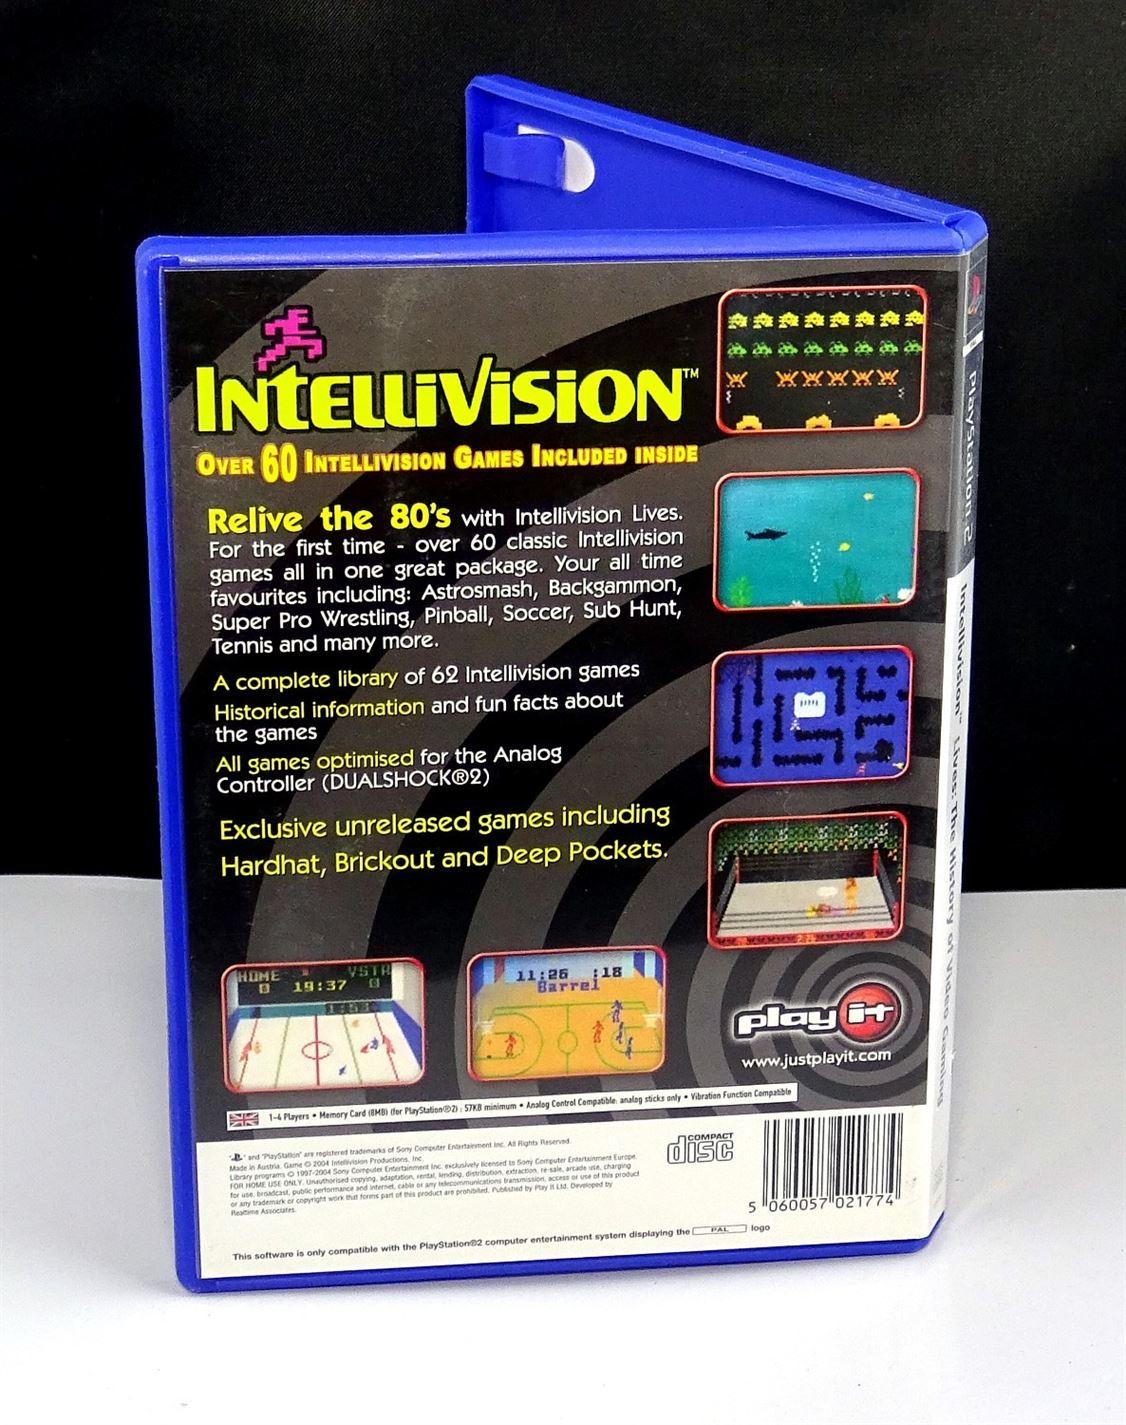 Intellivision Lives PS2 (Playstation 2) - UK Seller